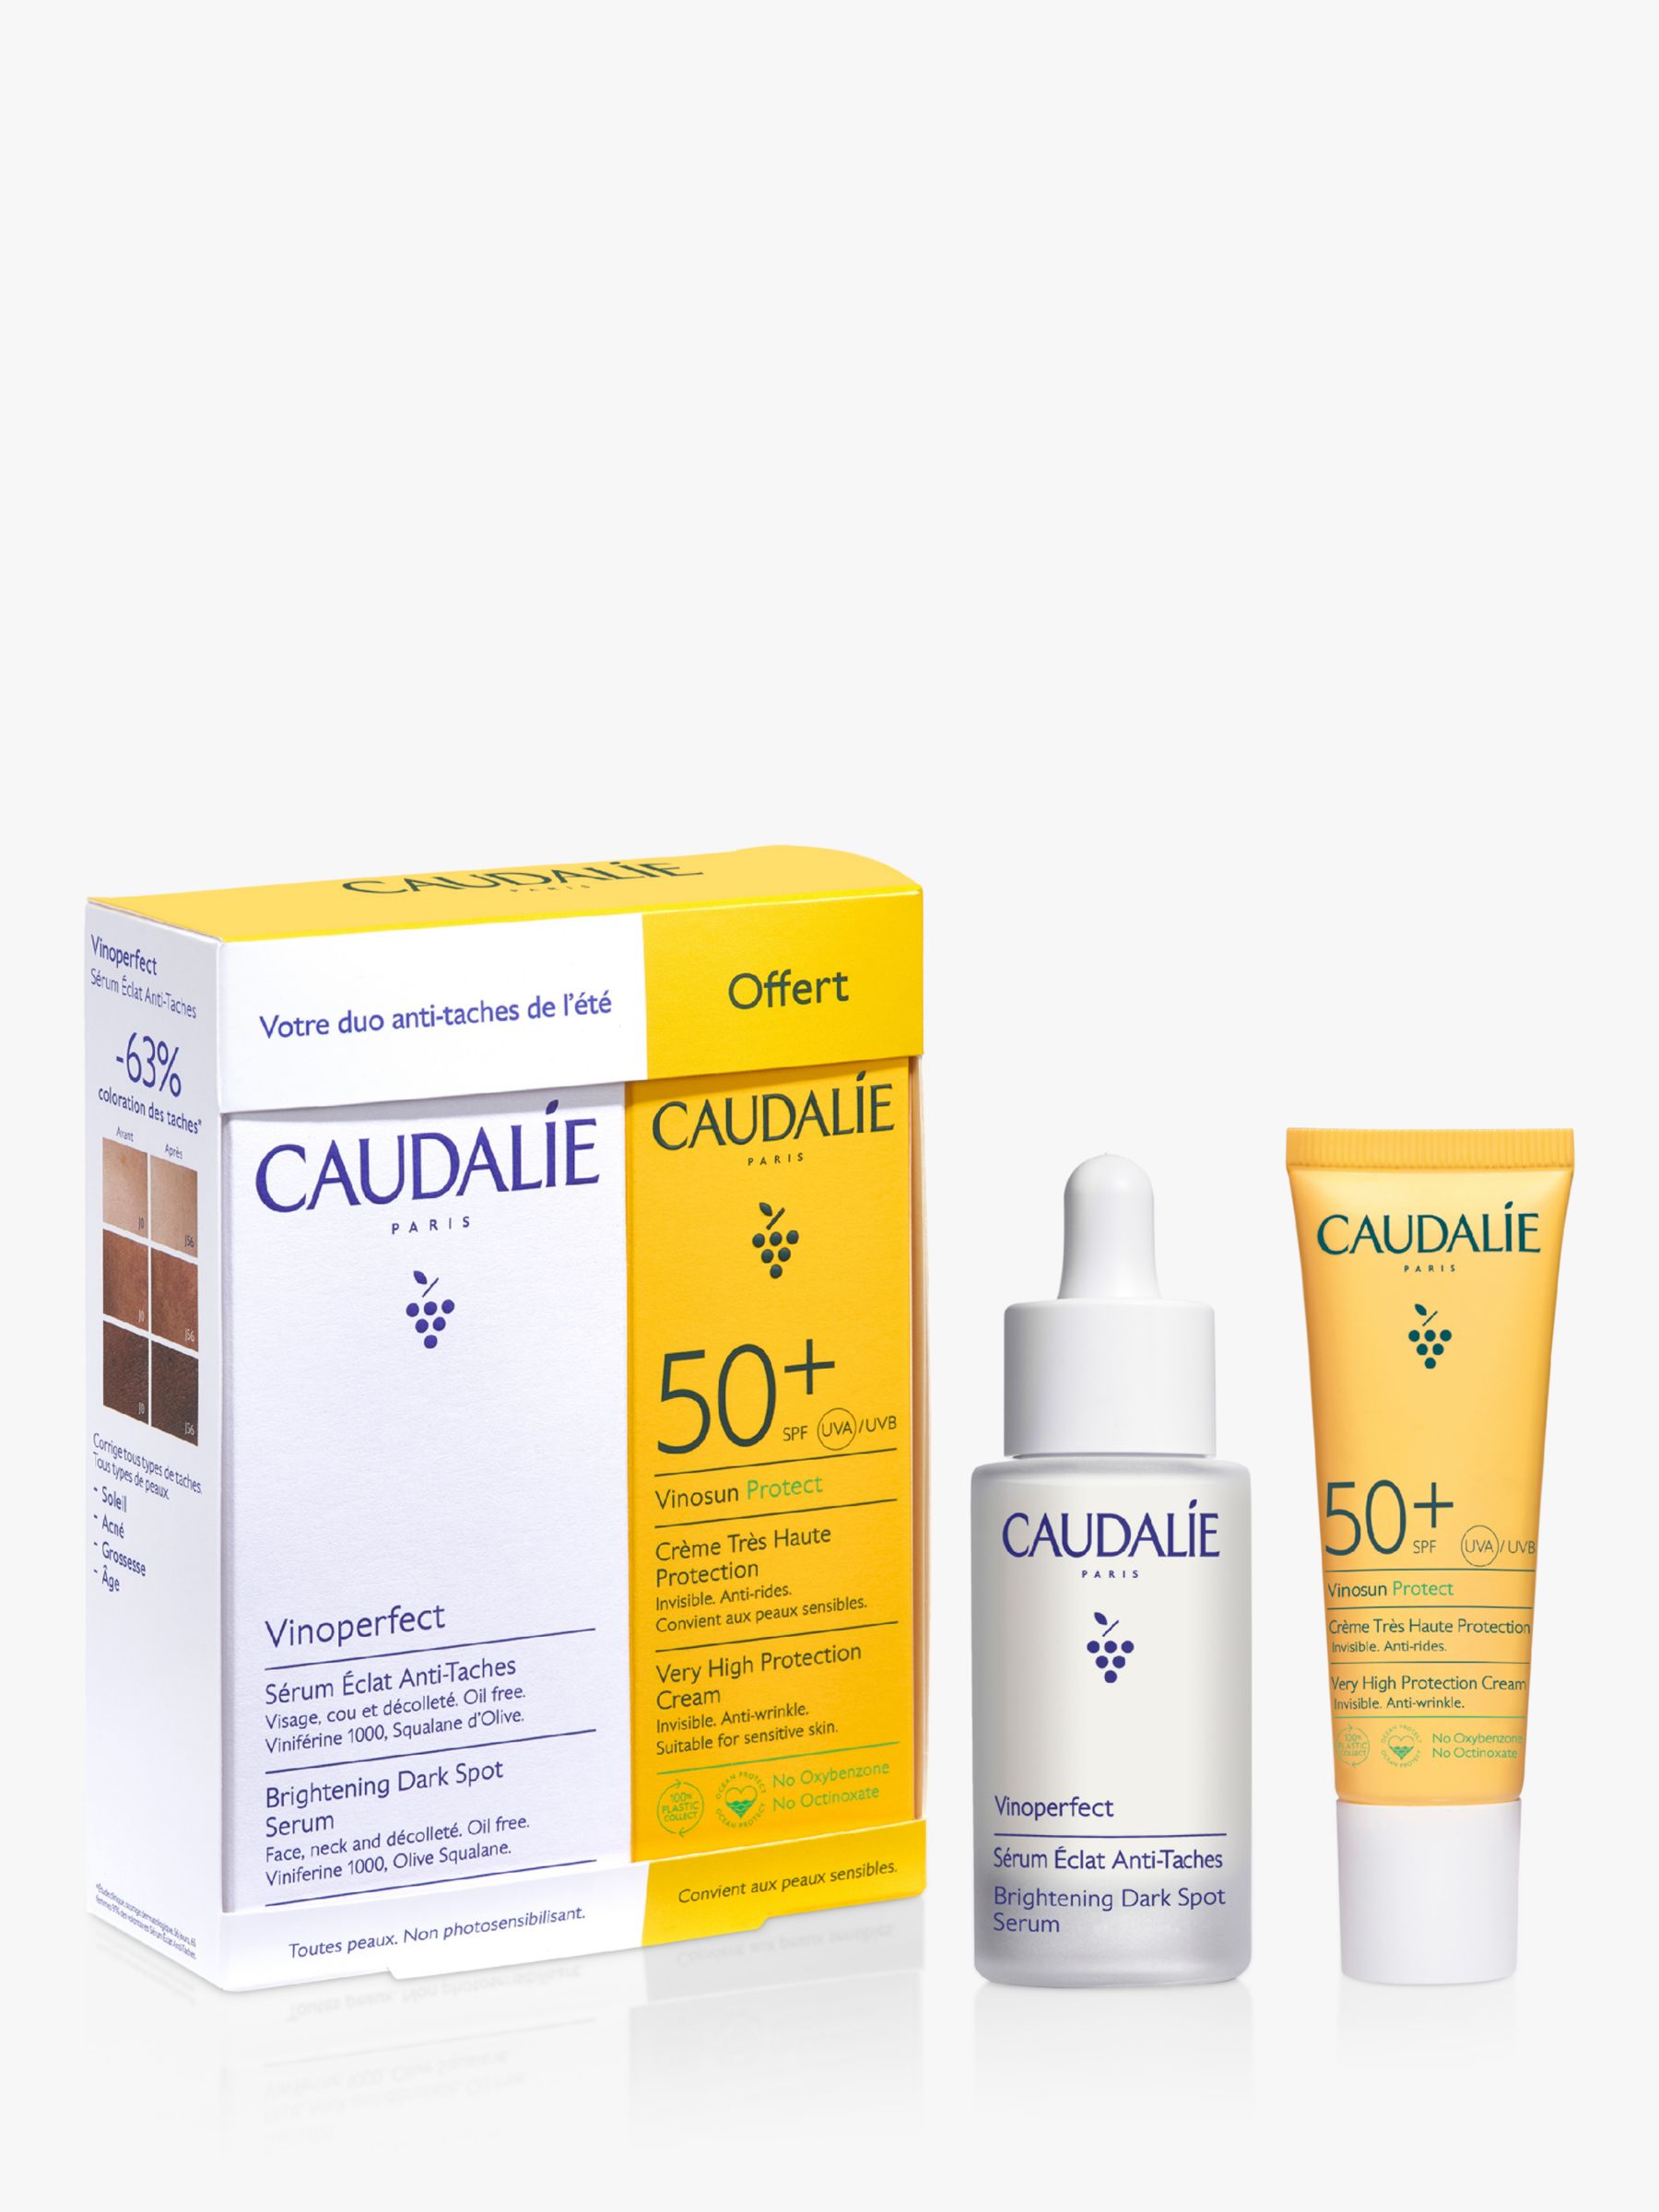 Caudalie Vinoperfect Serum and Suncare Skincare Gift Set